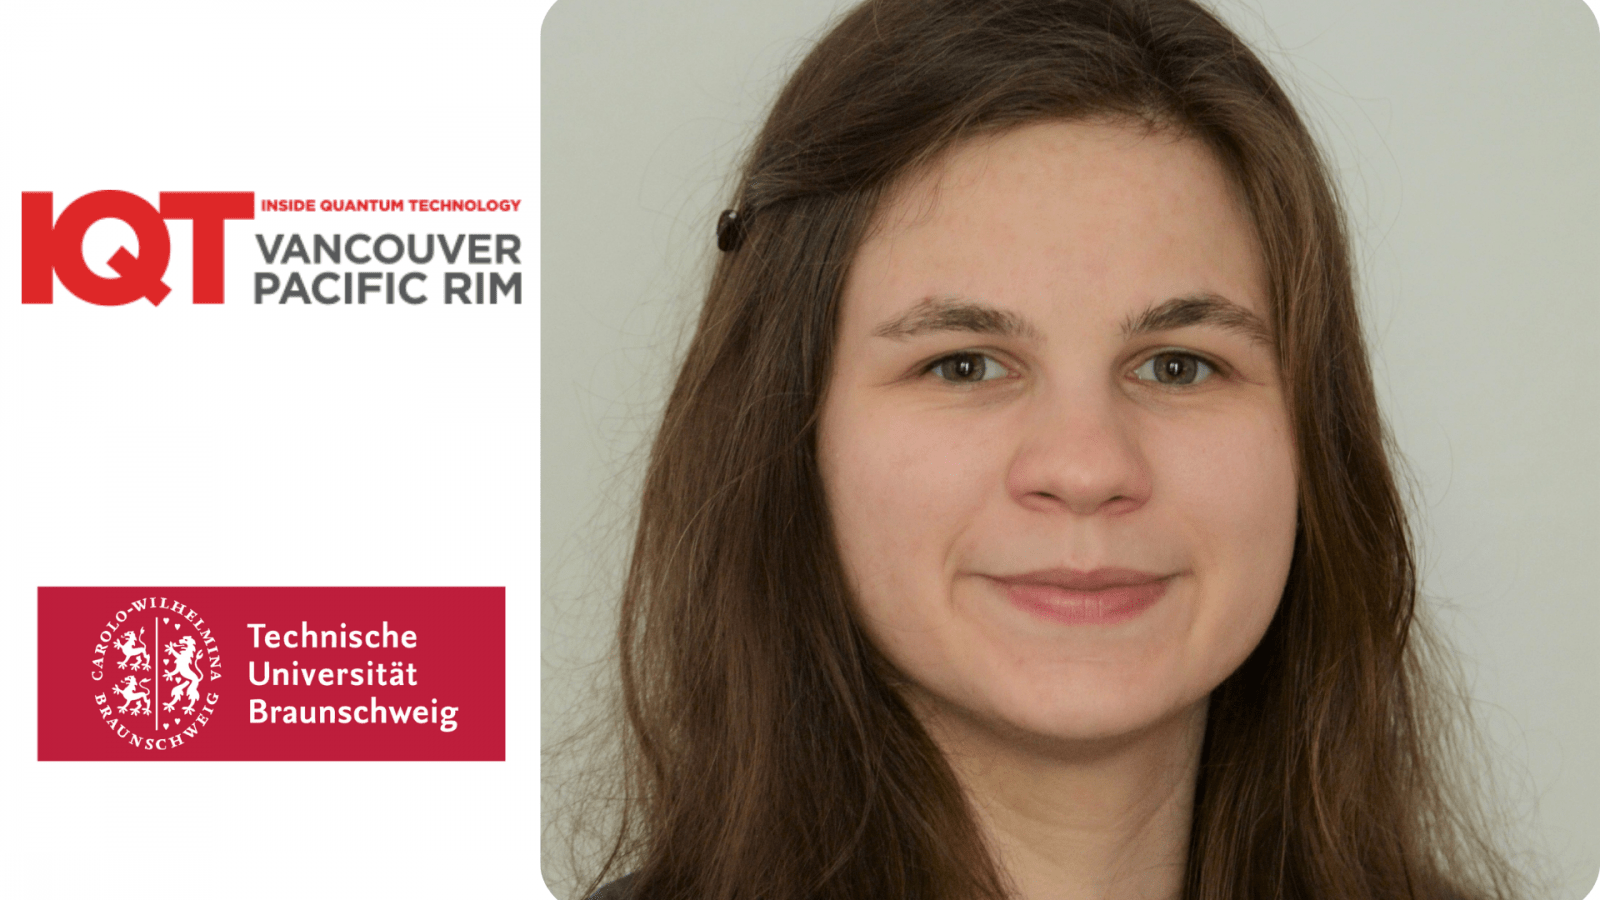 Franziska Greinert، دستیار پژوهشی در دانشگاه فنی براونشوایگ، سخنران IQT Vancouver/Pacific Rim برای کنفرانس 2024 است.